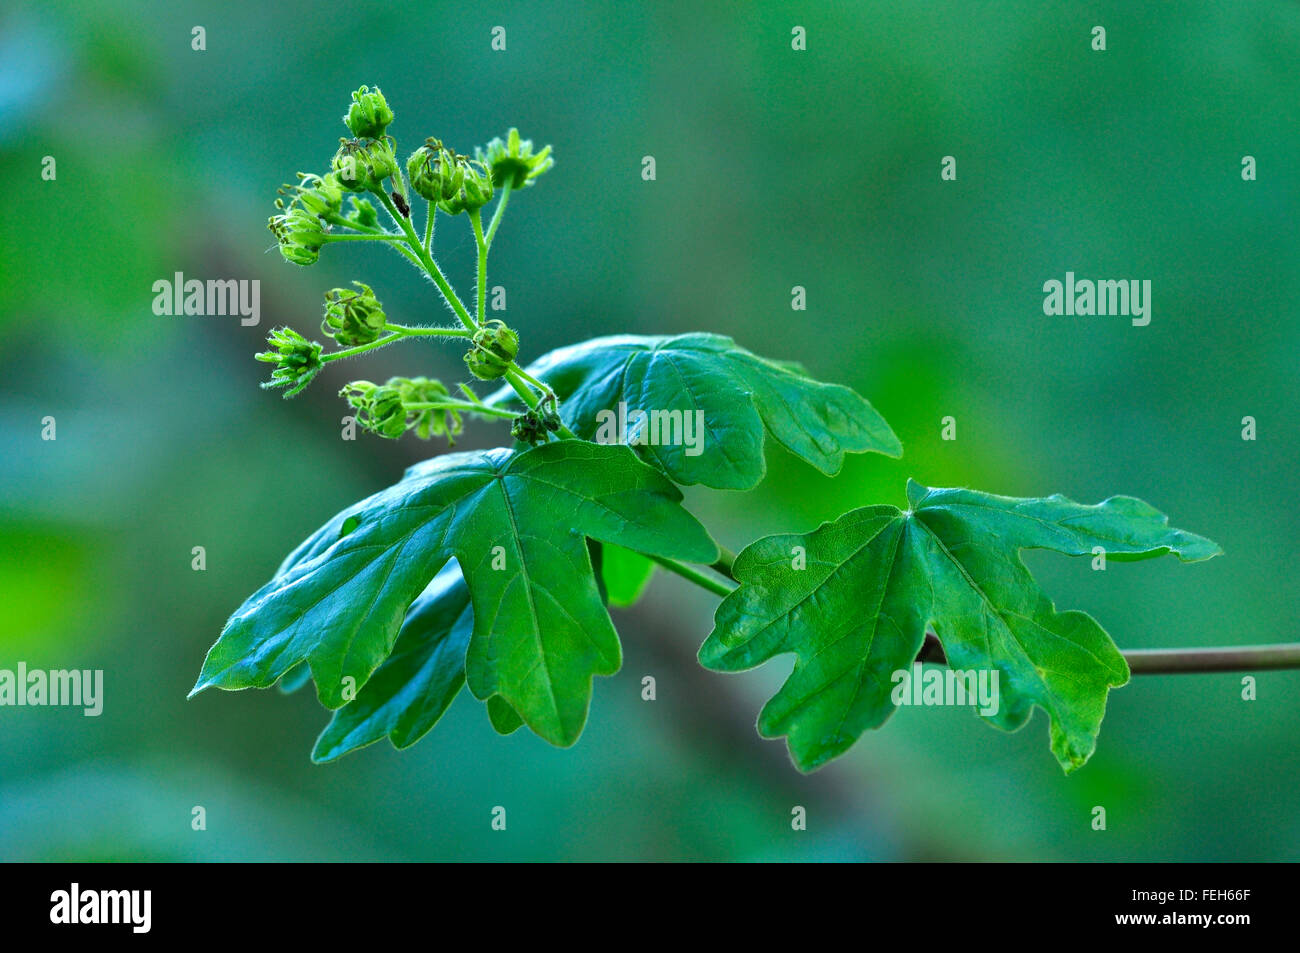 field maple blossom and foliage Stock Photo